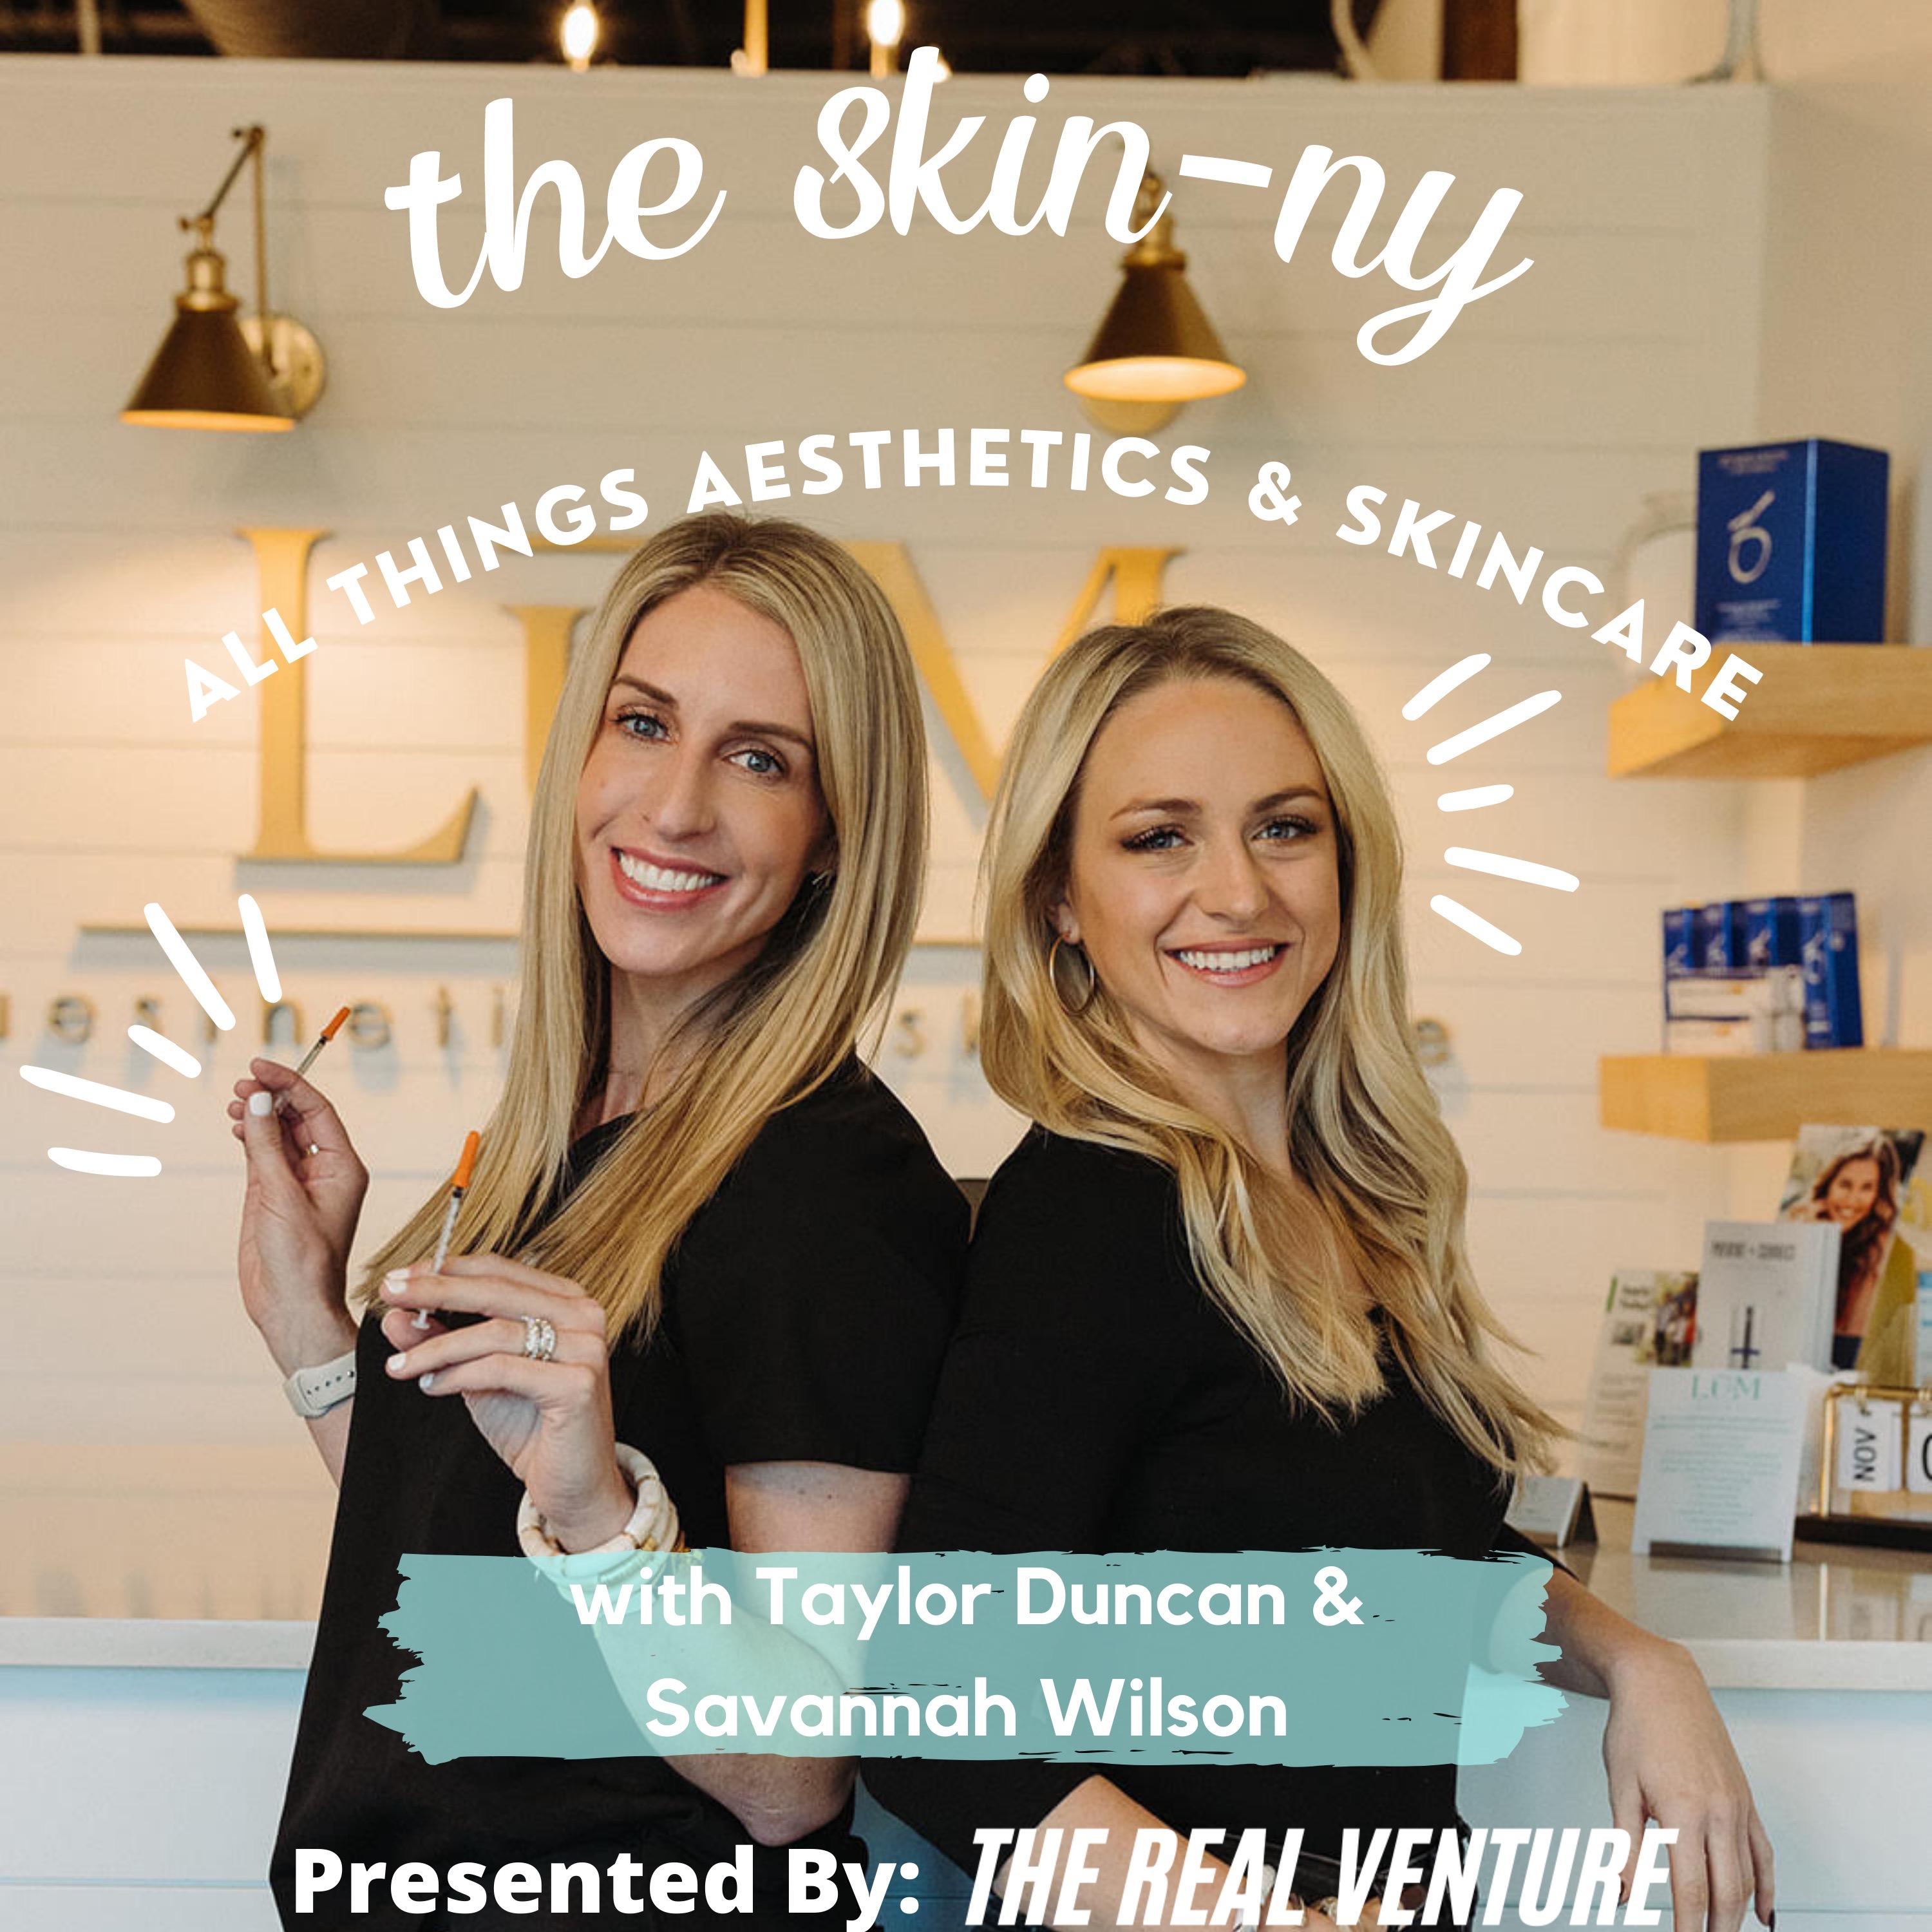 The Skin-ny: All Things Aesthetics & Skincare